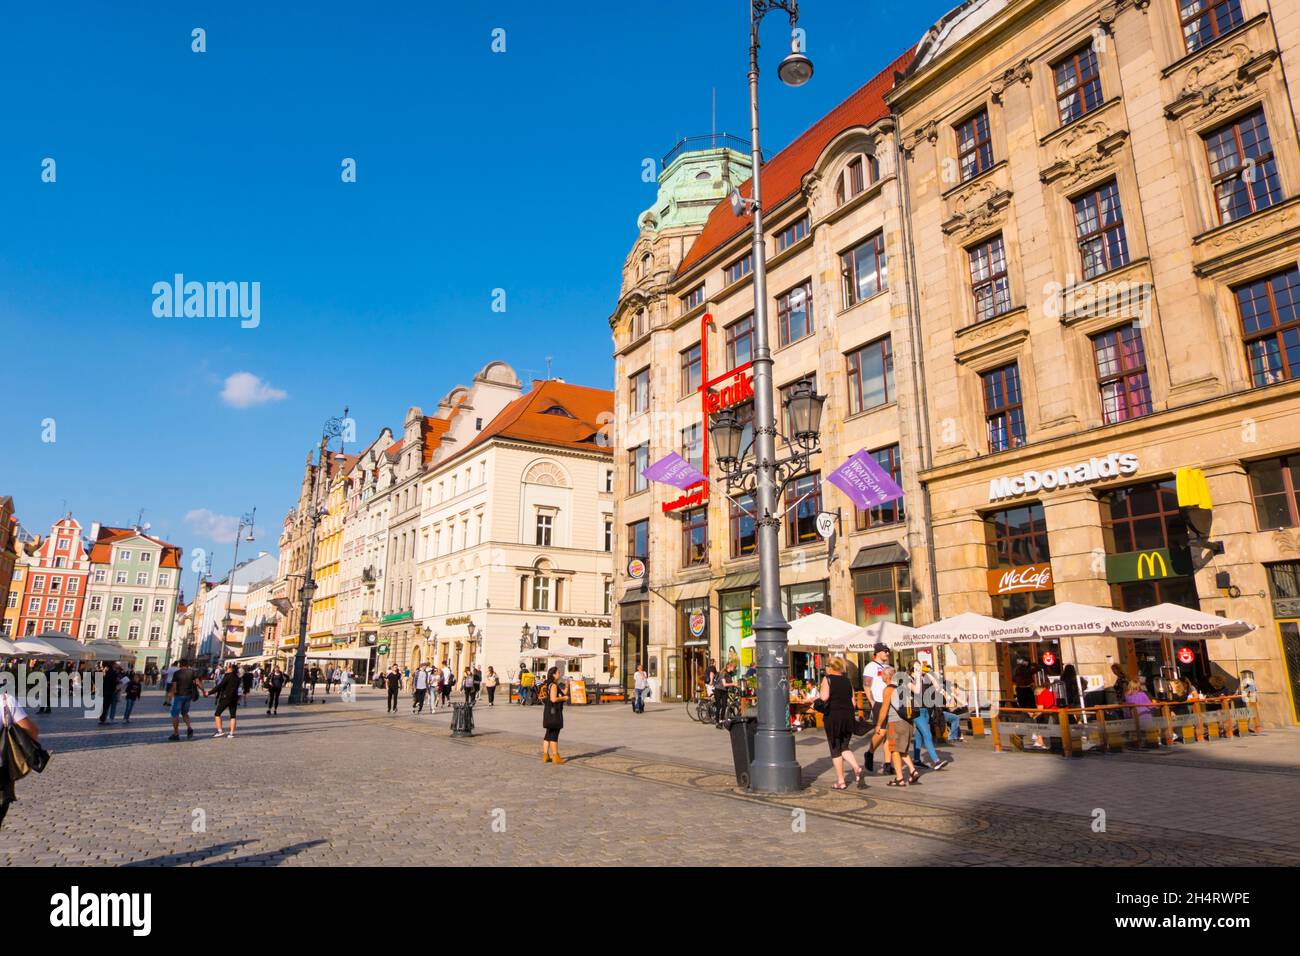 Rynek, plaza del mercado, casco antiguo, Wroclaw, Polonia Foto de stock